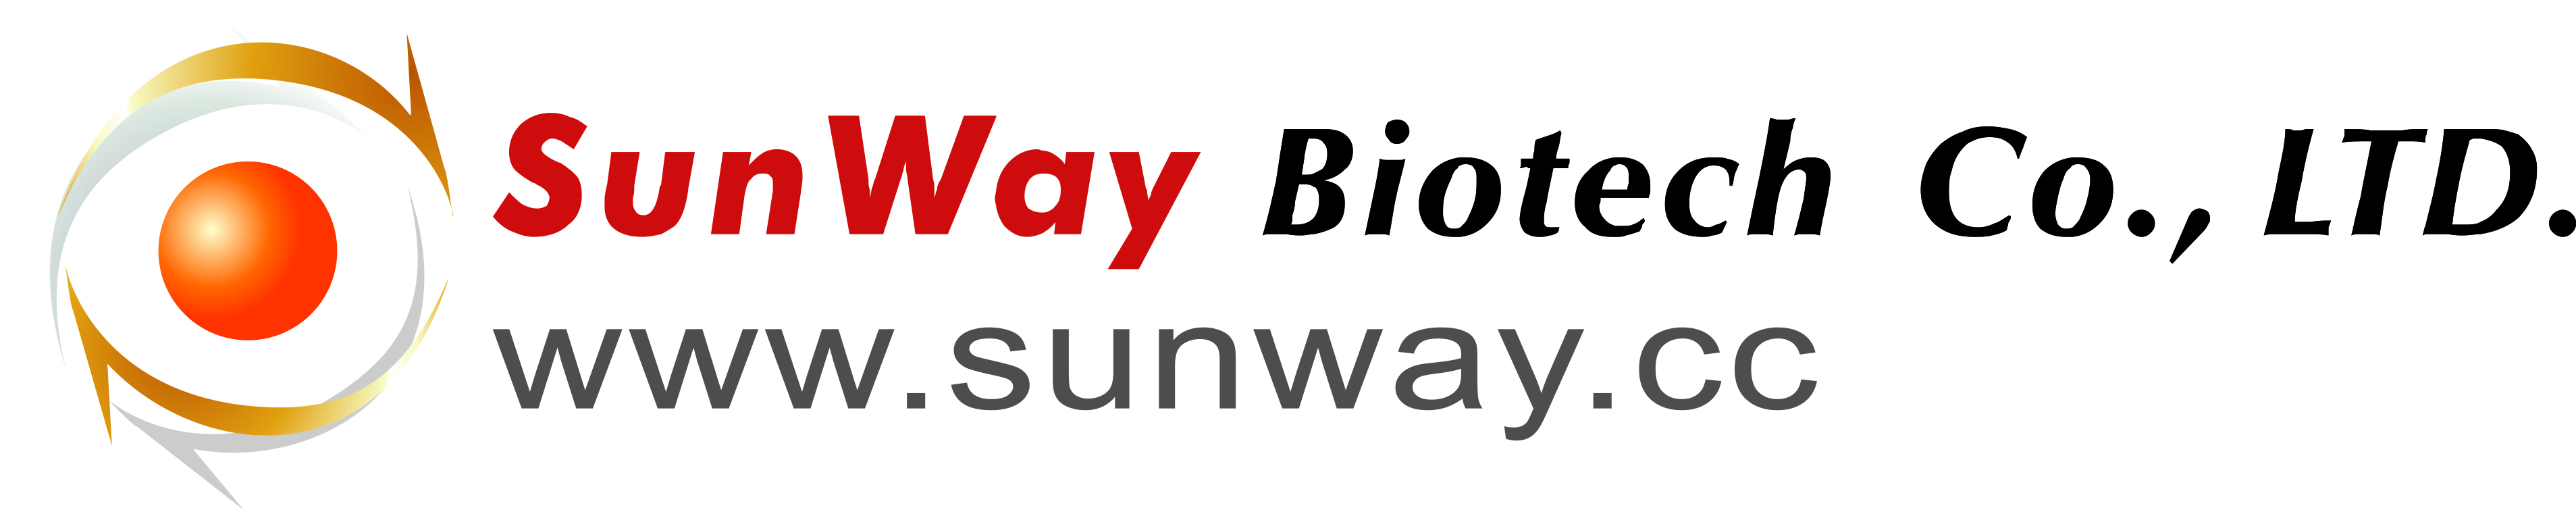 SunWay Biotech Co Ltd